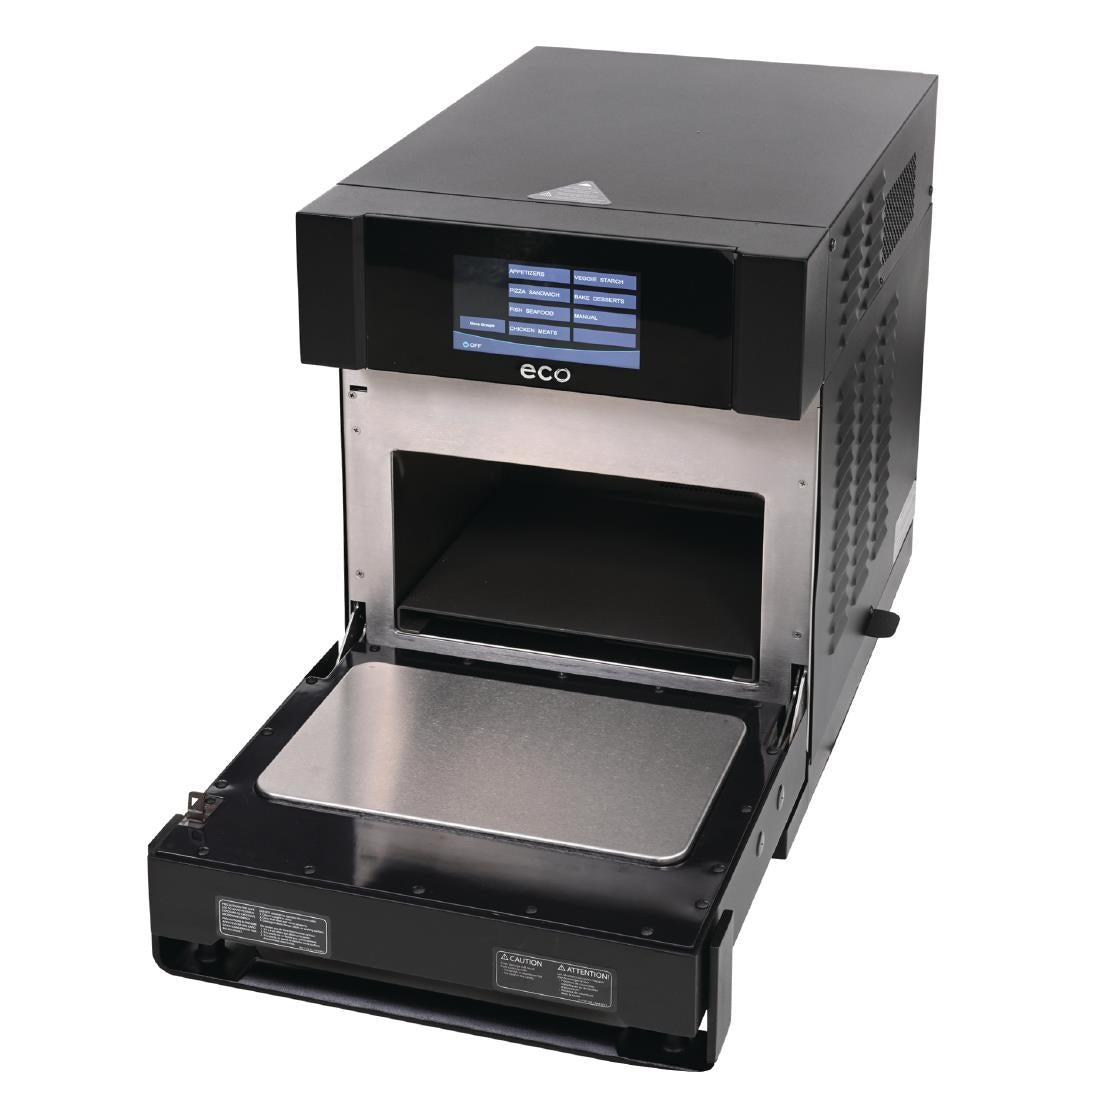 DG036 Turbochef Eco Rapid Cook Oven Black JD Catering Equipment Solutions Ltd